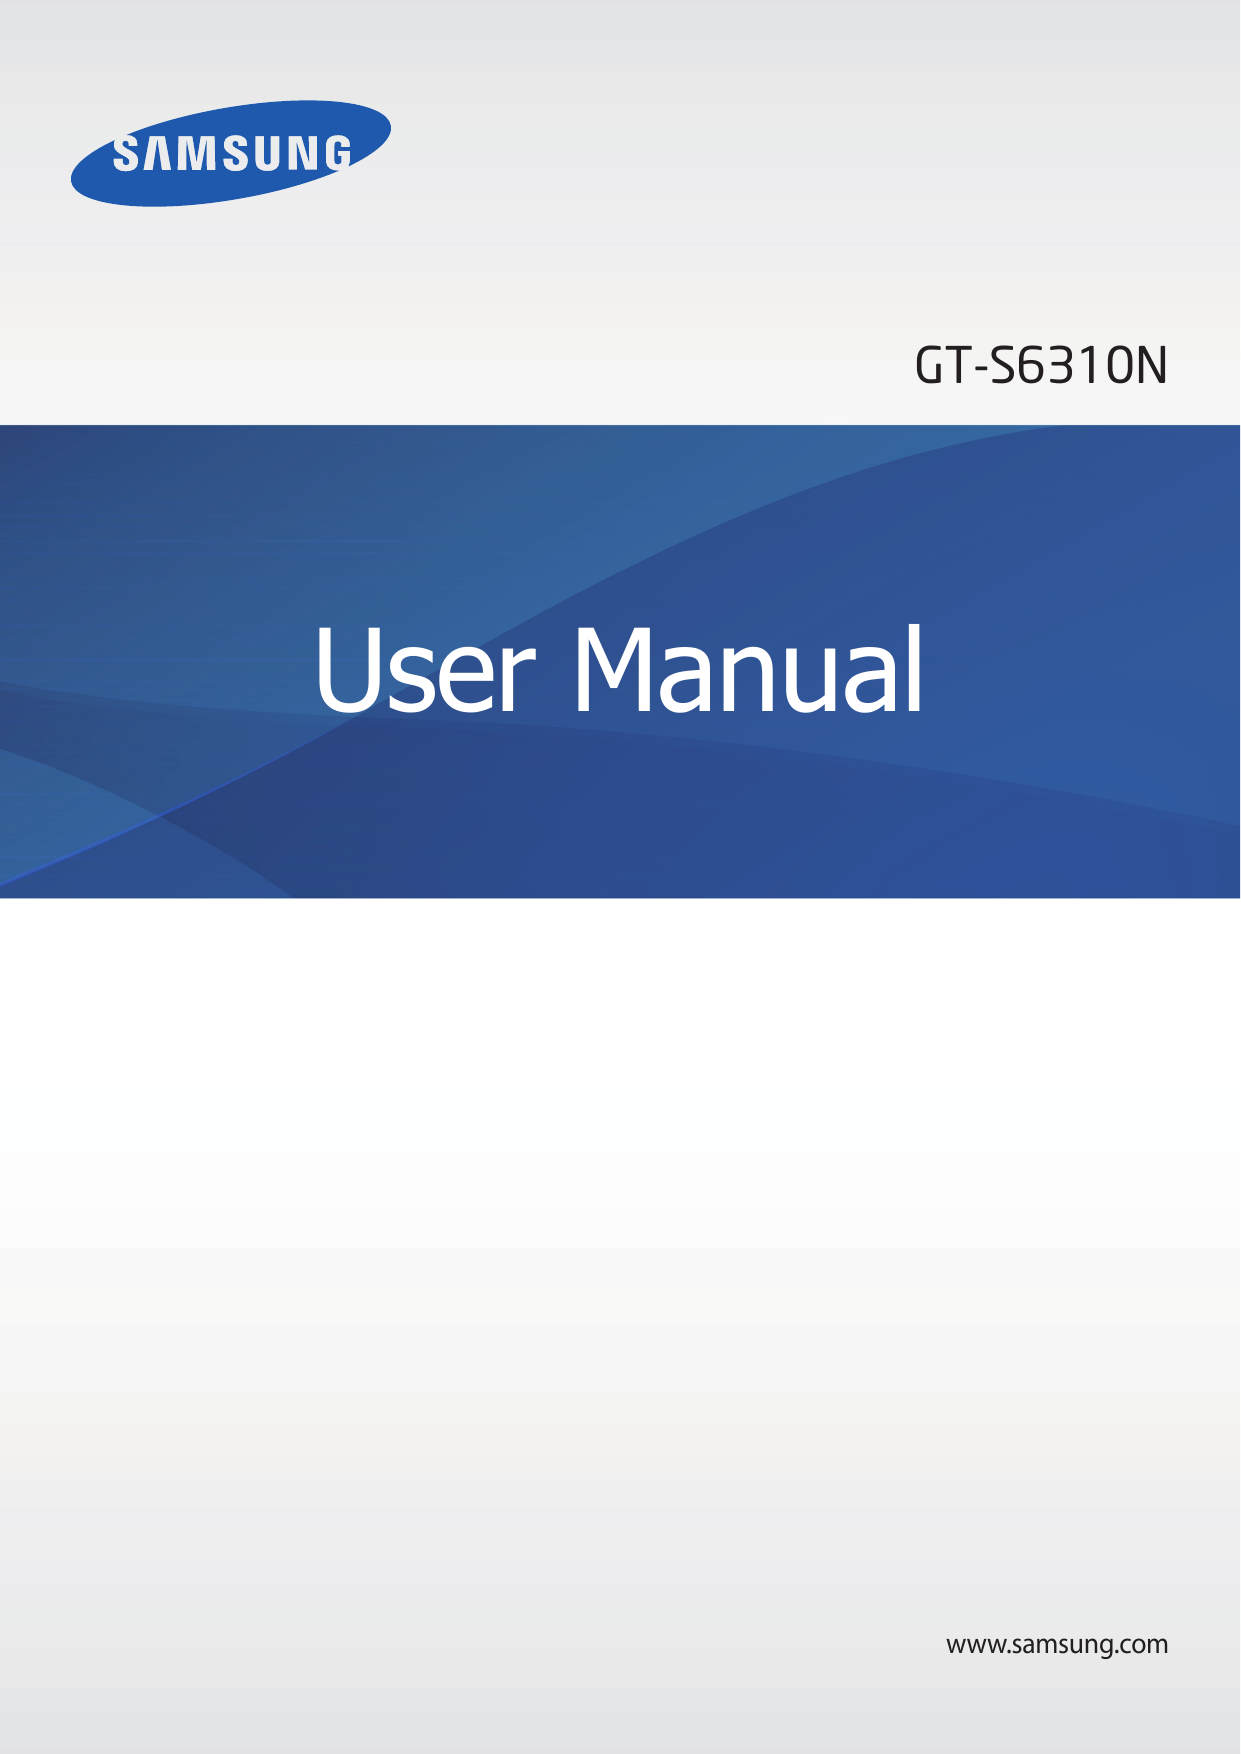 GT-S6310NUser Manualwww.samsung.com